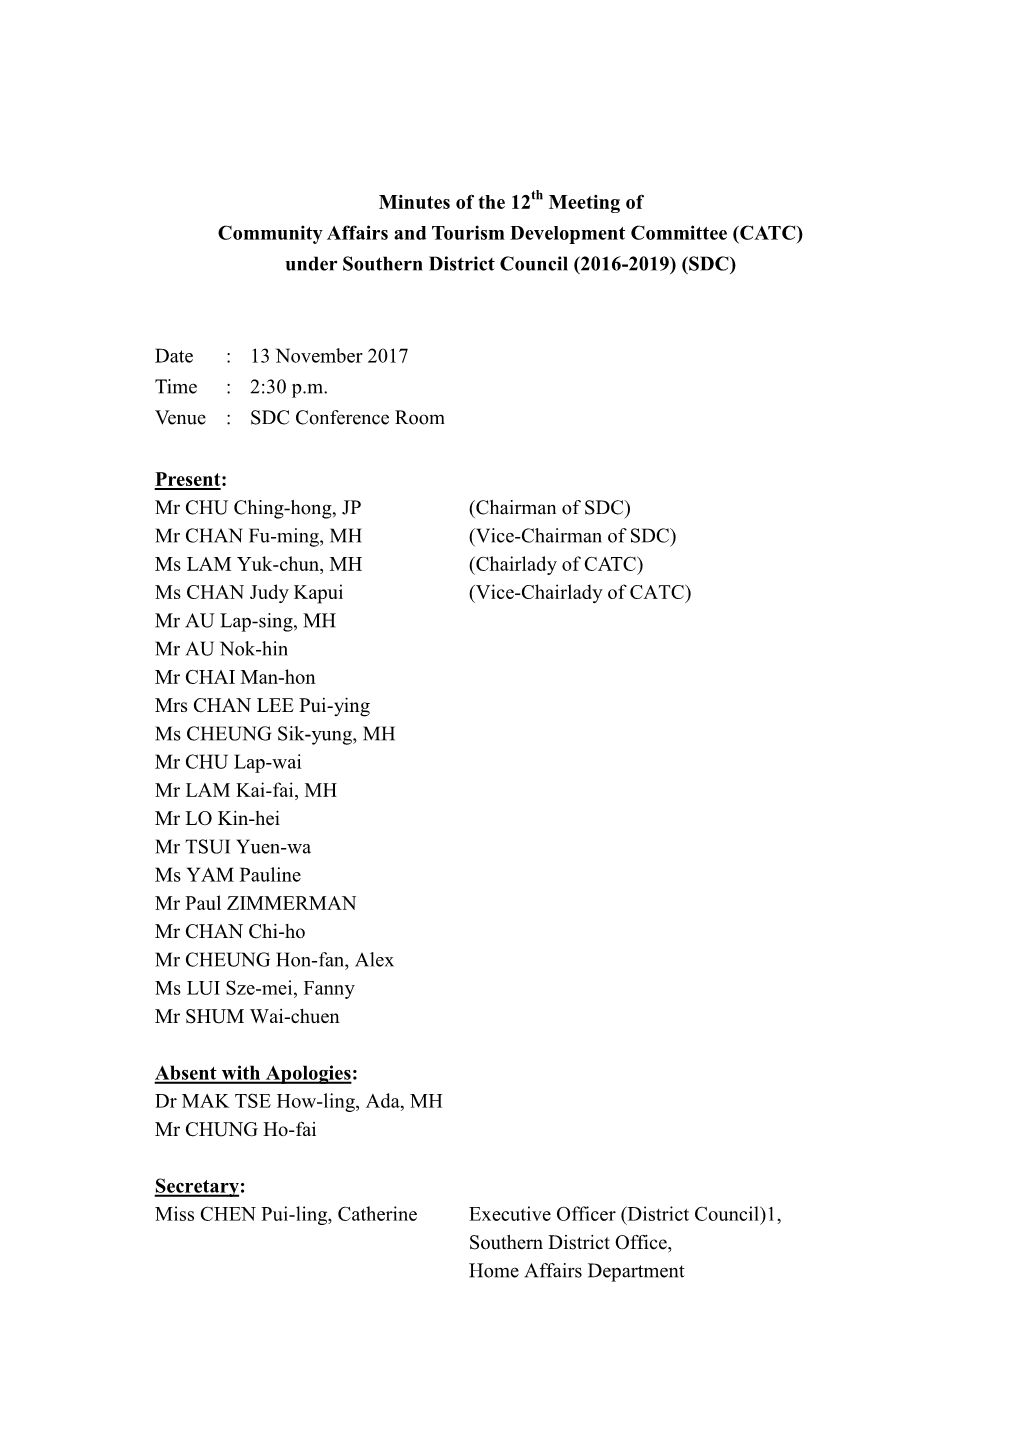 CATC 12Th Meeting Minutes (2016-2019)